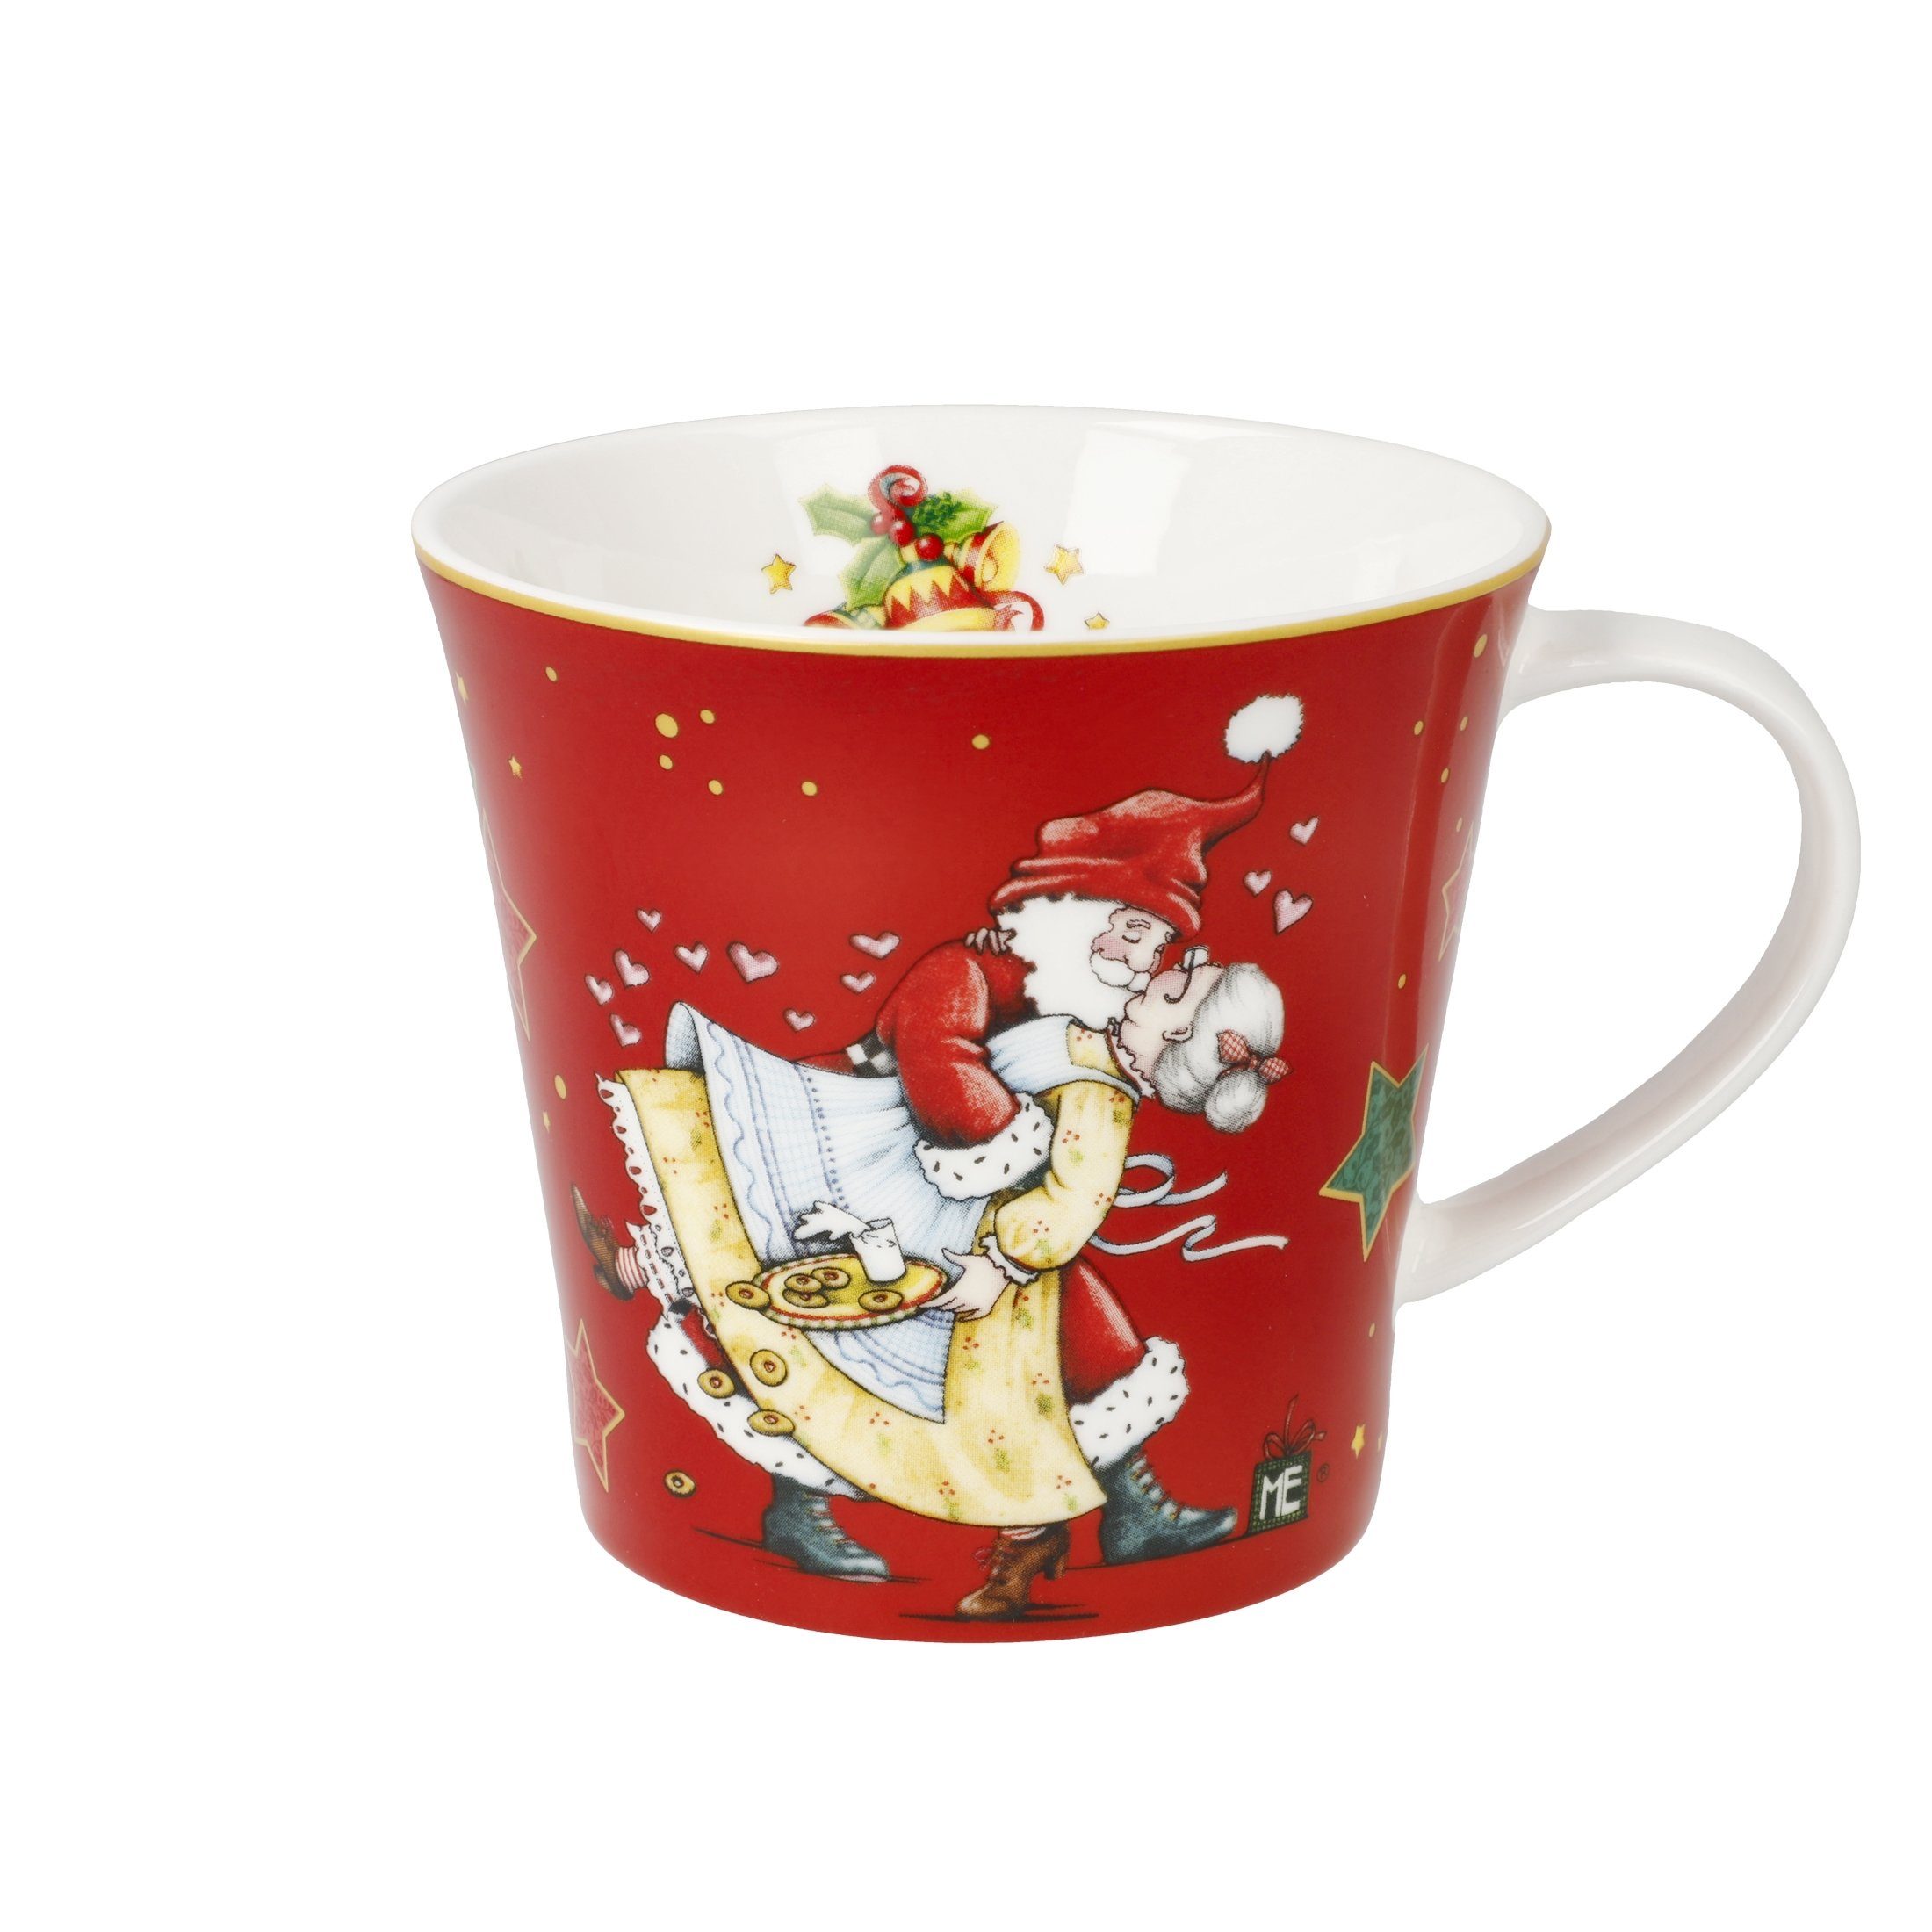 Mug Spülmaschinengeeignet - Home Mary Fine Engelbreit China, Becher Goebel Sweet Home, Coffee-/Tea Bone